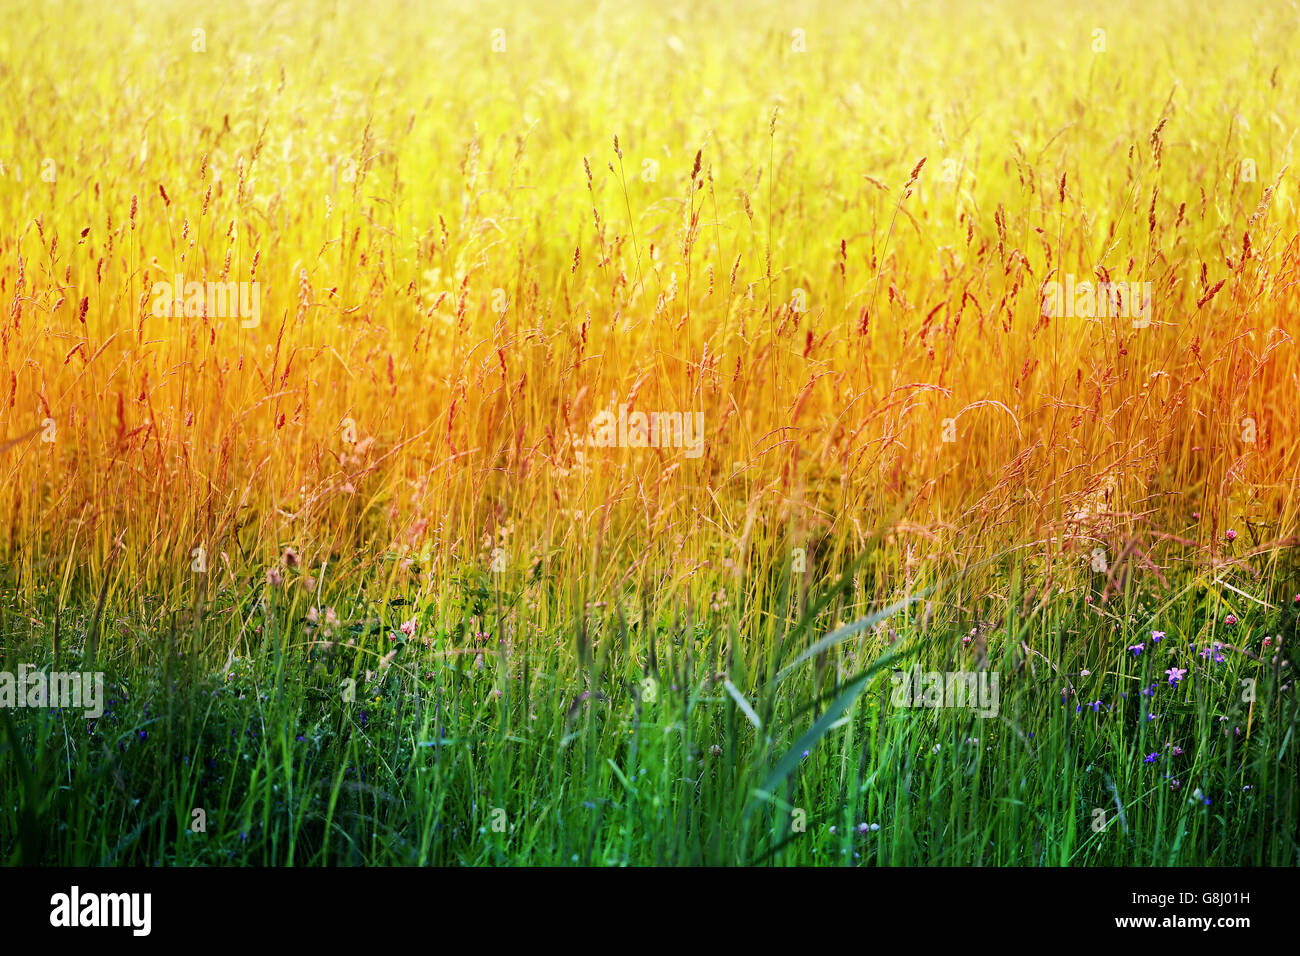 Photos bright green grass on a summer meadow Stock Photo